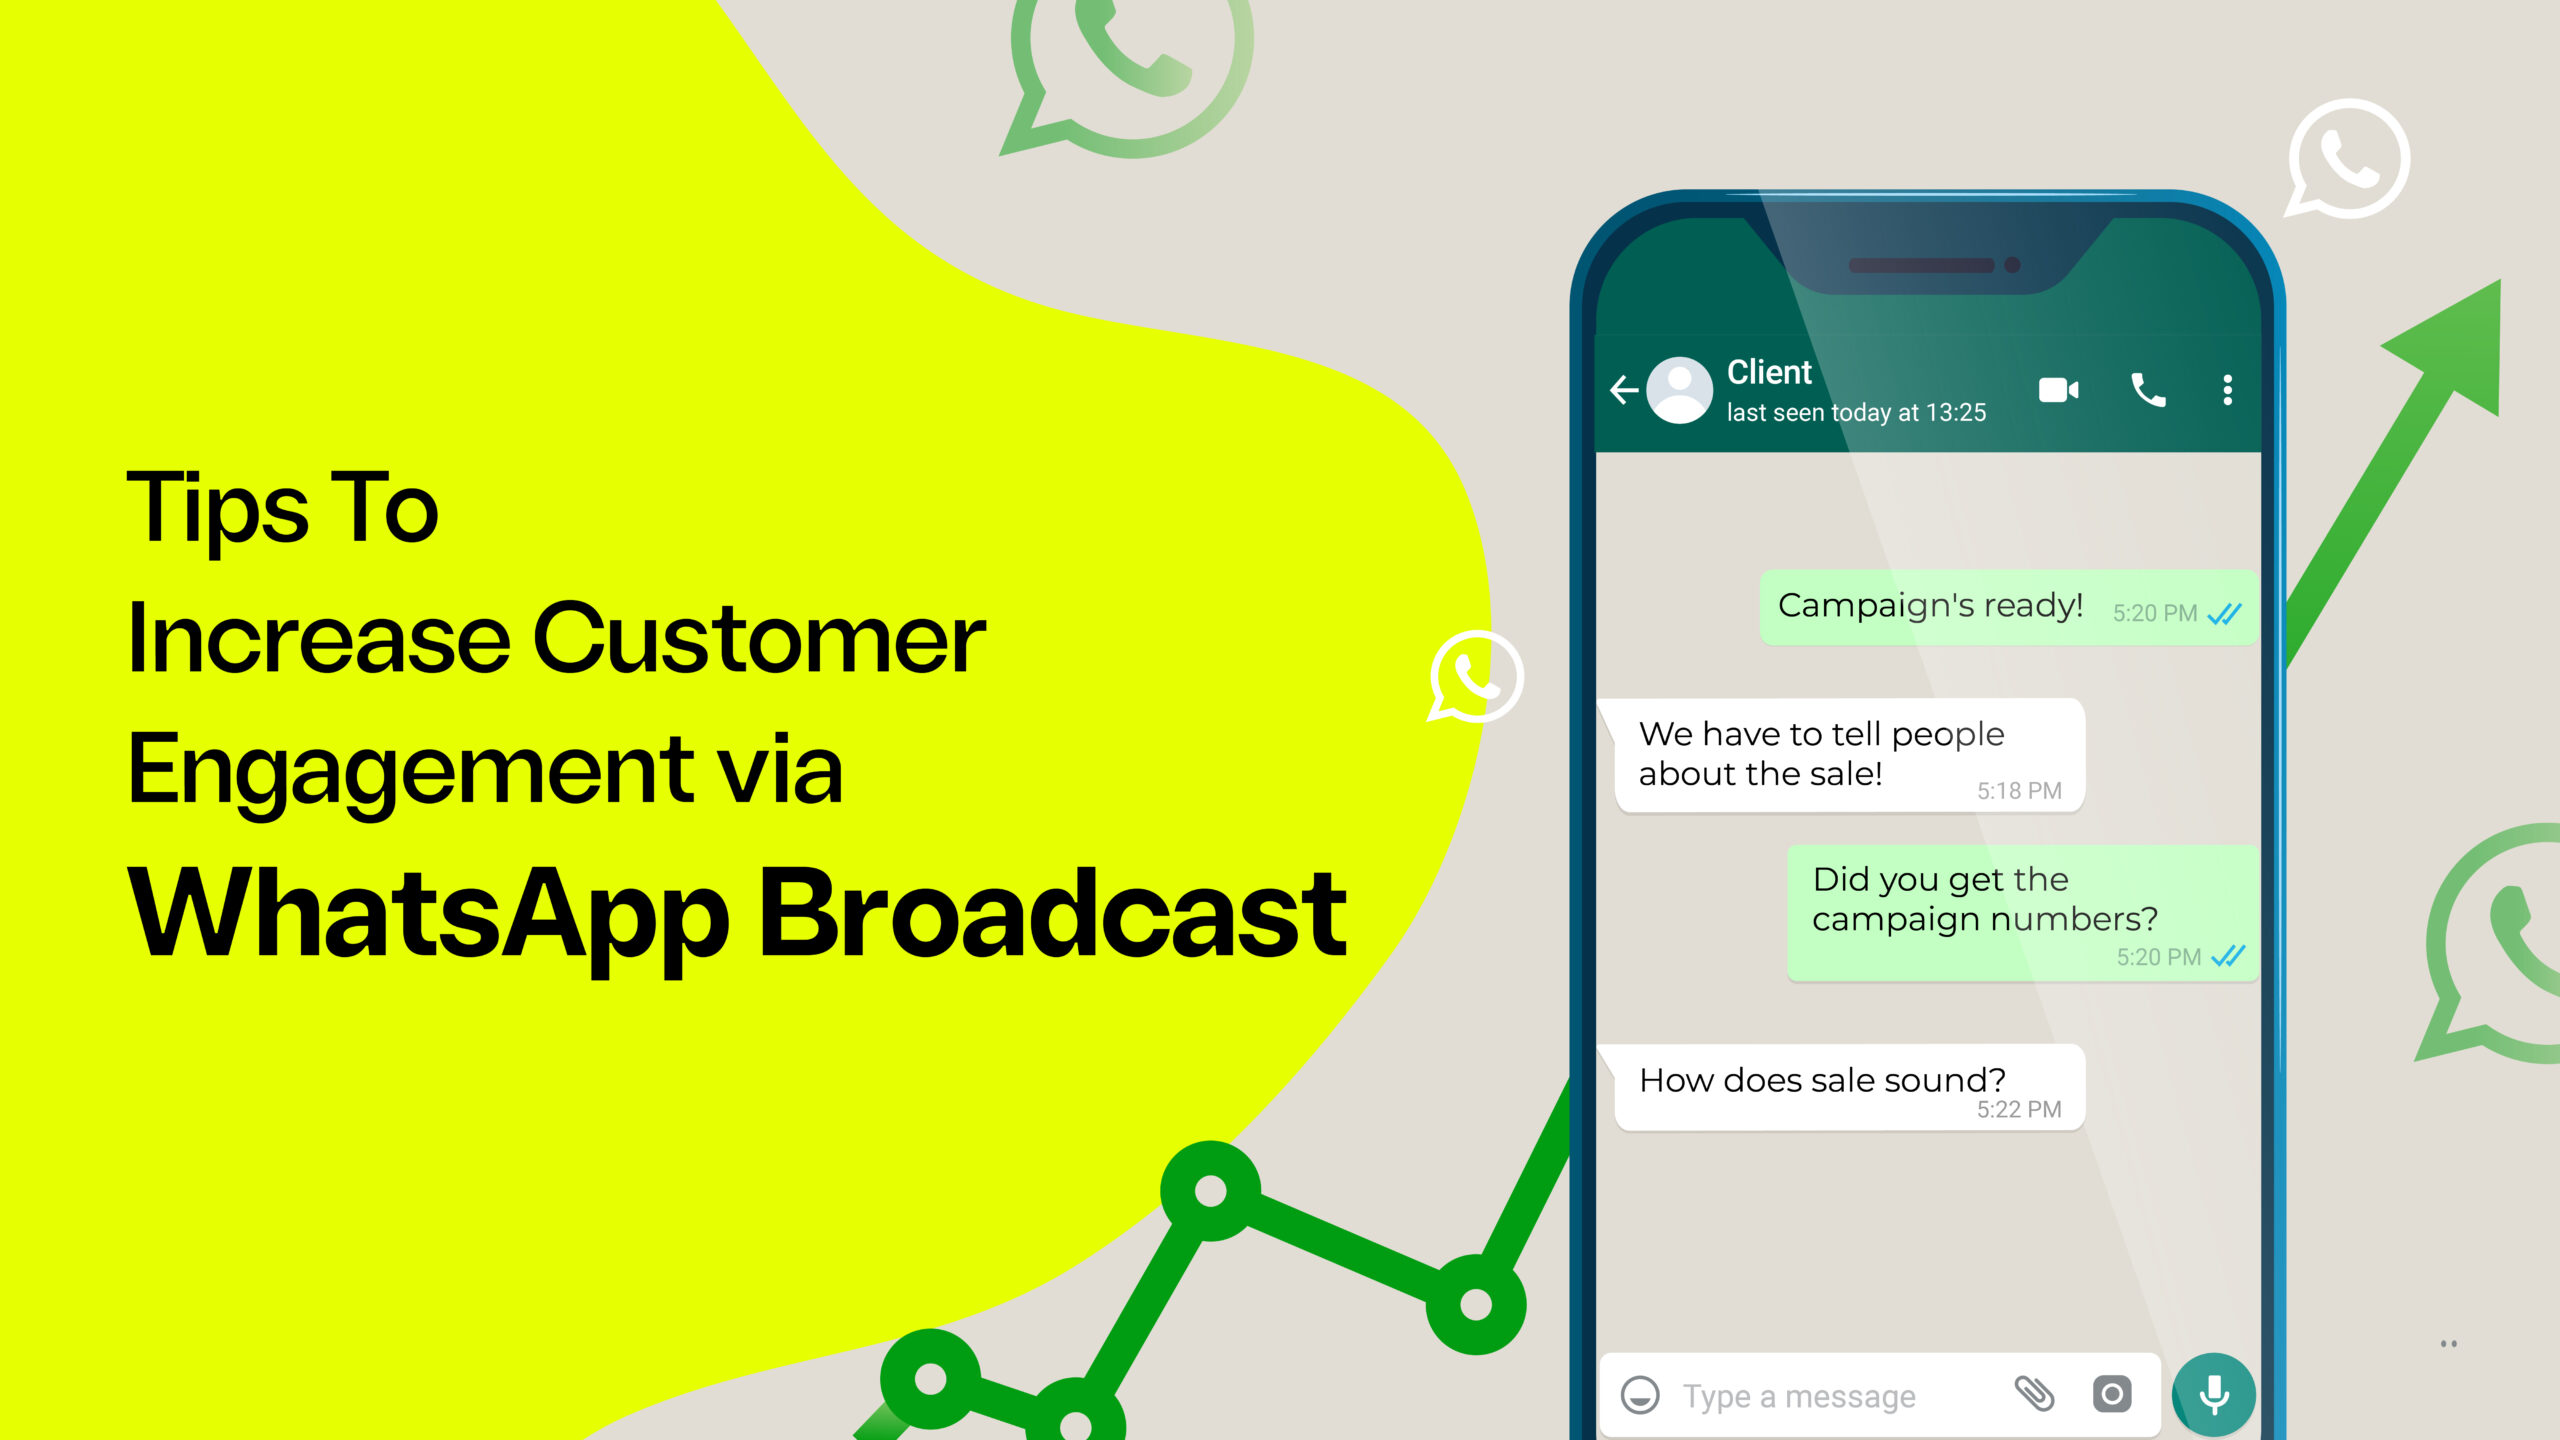 Tips To Increase Customer Engagement via WhatsApp Broadcast